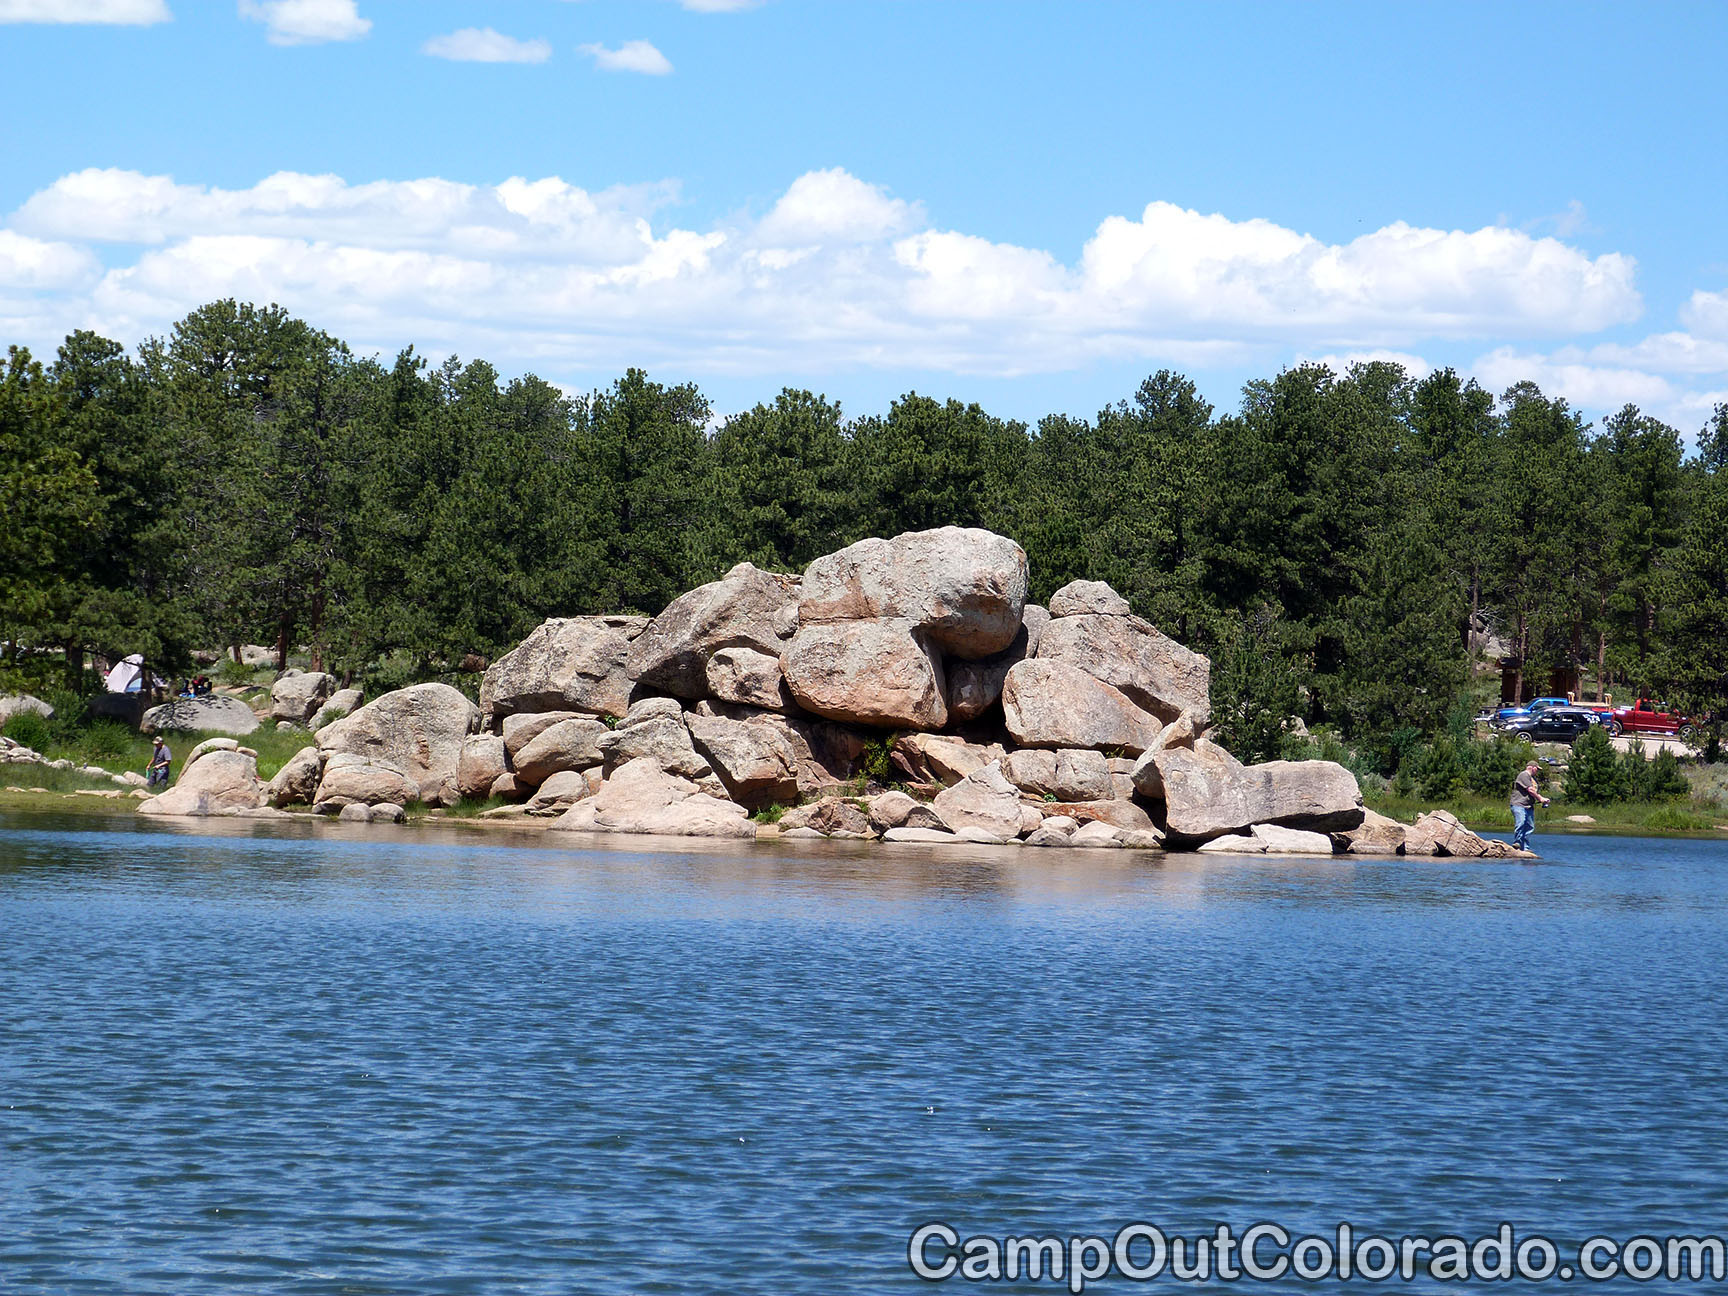 Campoutcolorado-dowdy-lake-campground-fishing-rocks